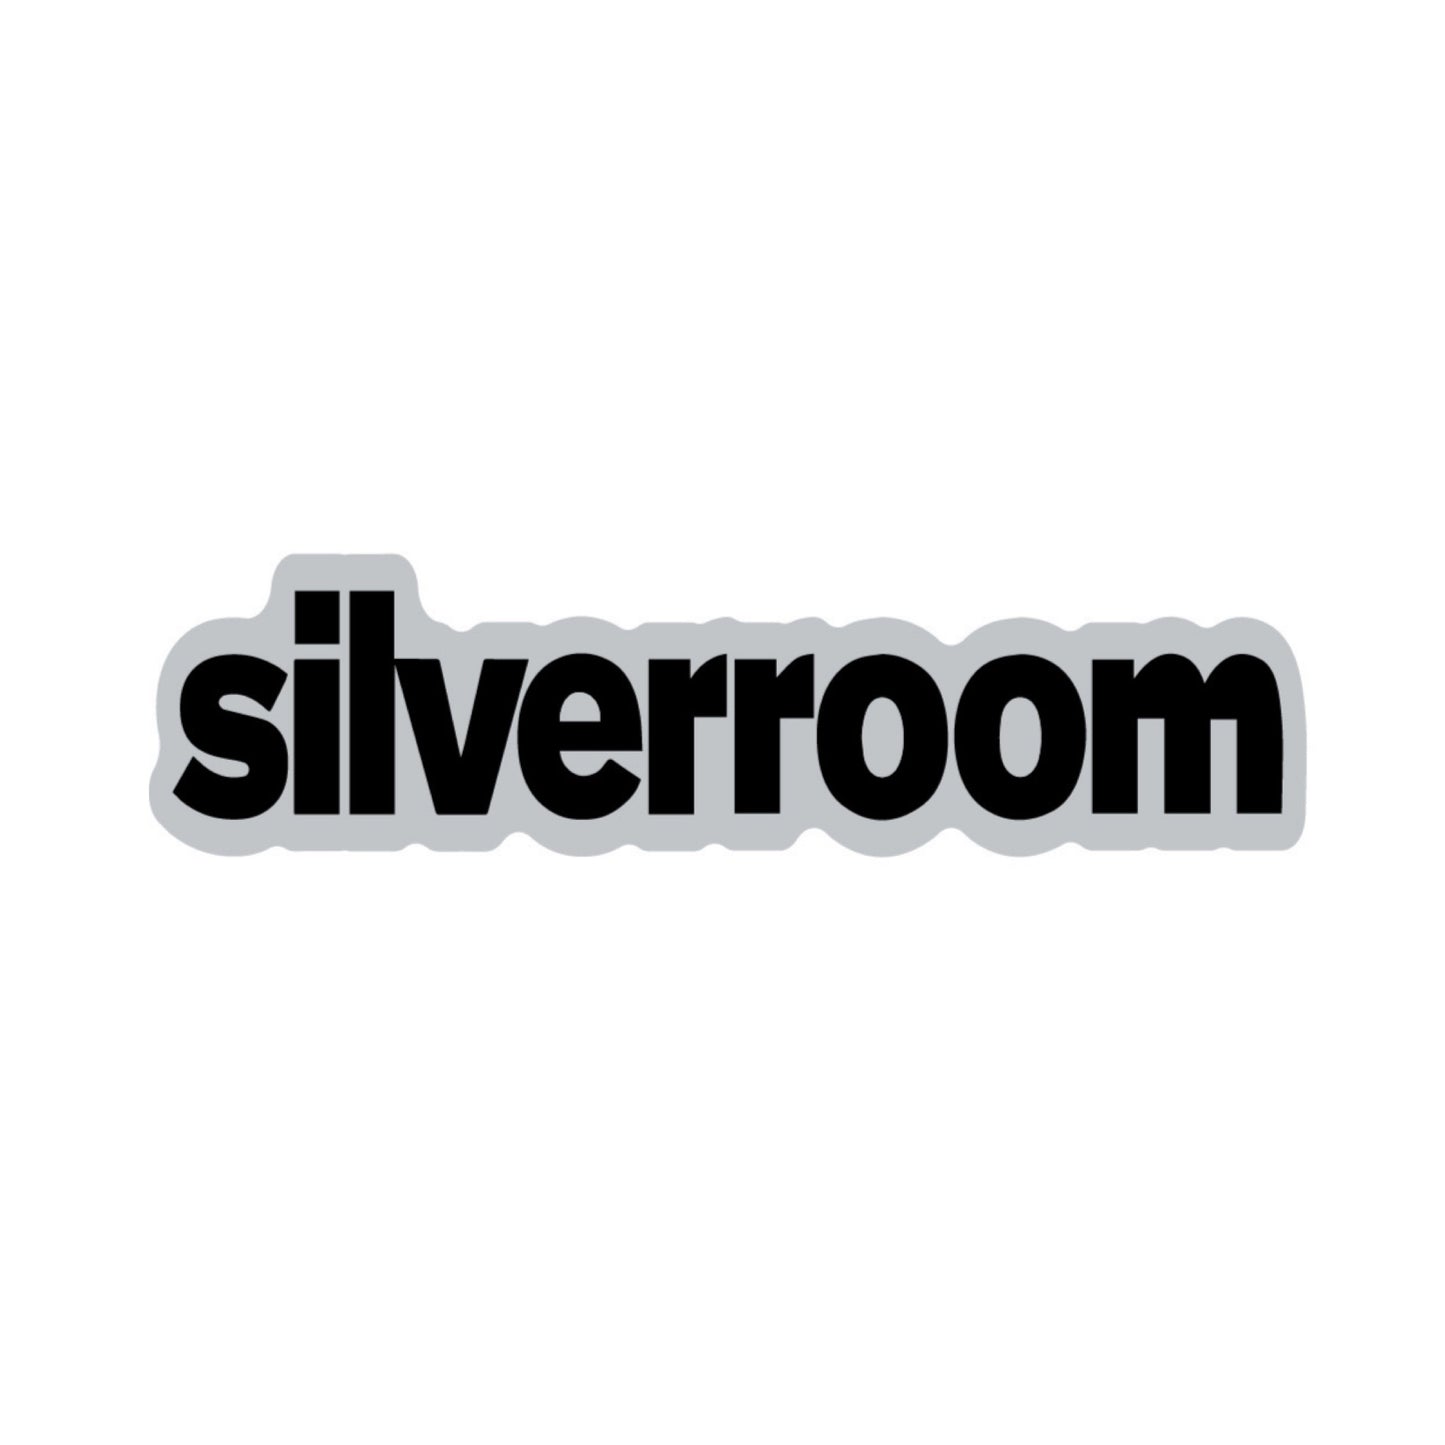 Silverroom Pin